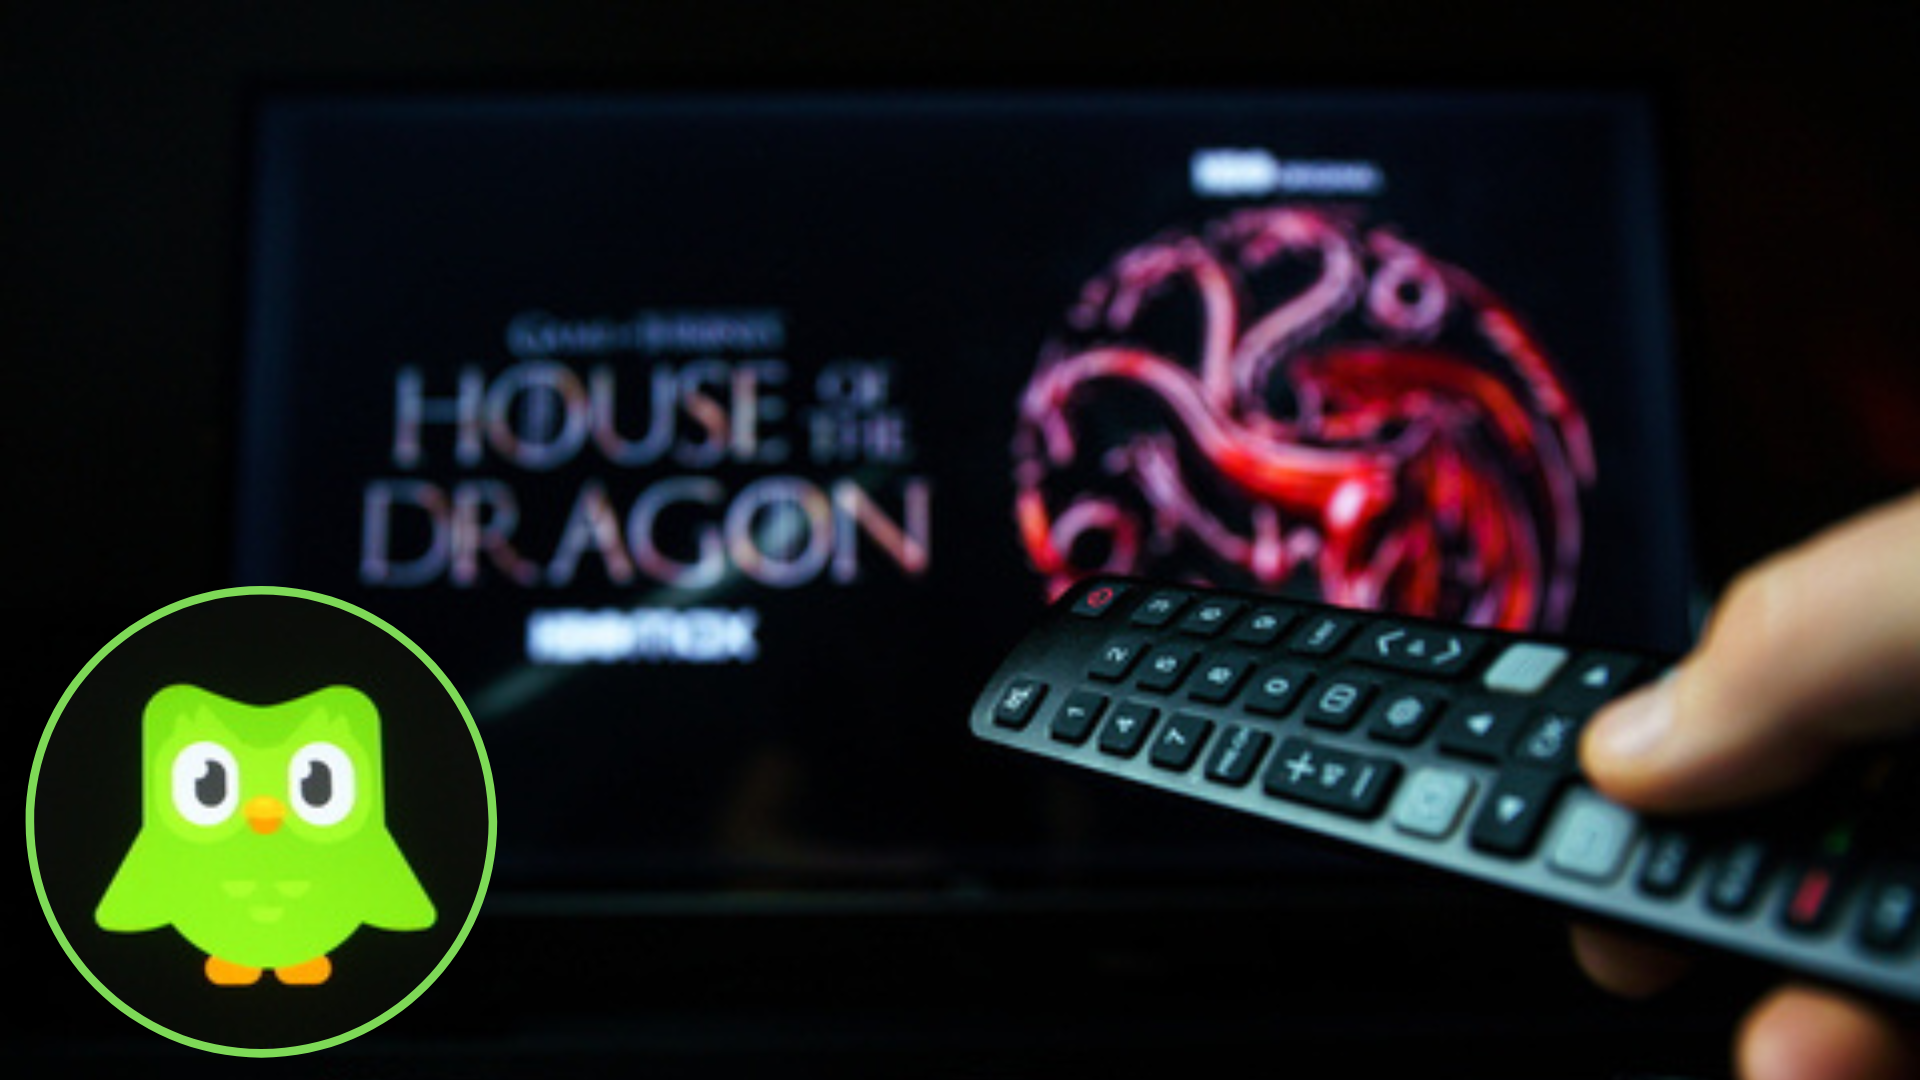 Duolingo e House of the Dragon (HBO)